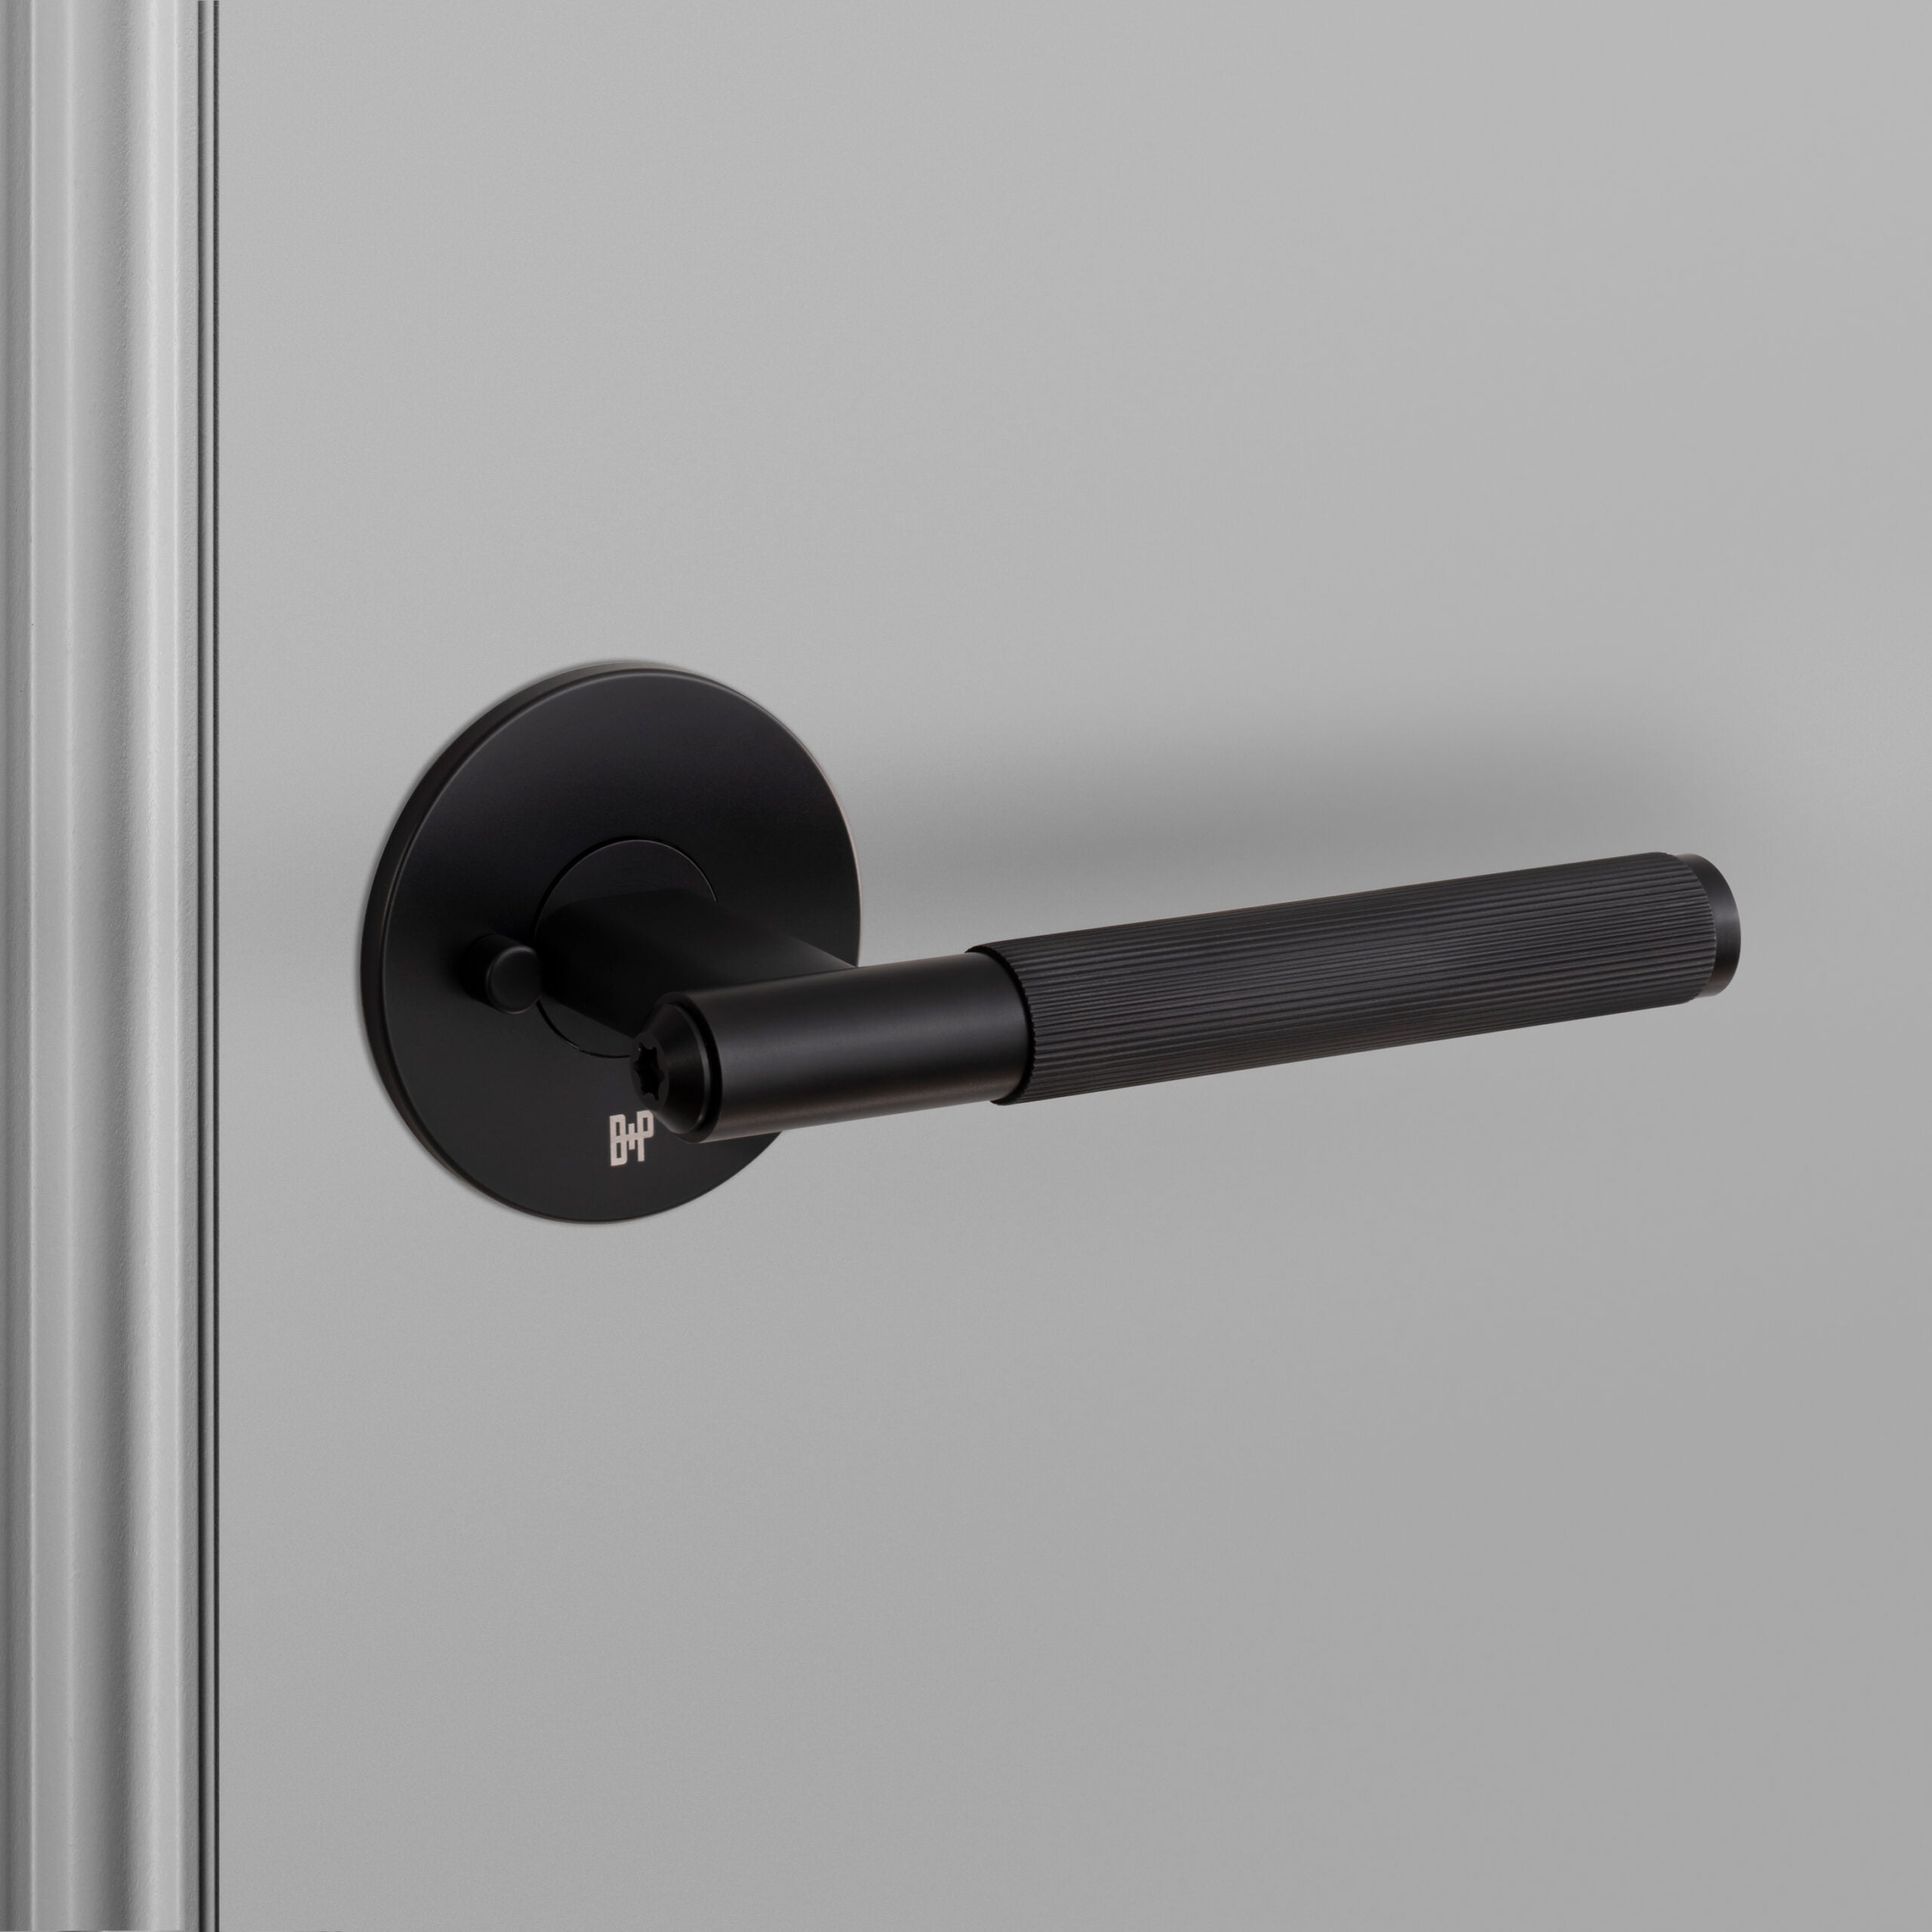 Buster + Punch Conventional Door Handle, Cross Design - PRIVACY TYPE